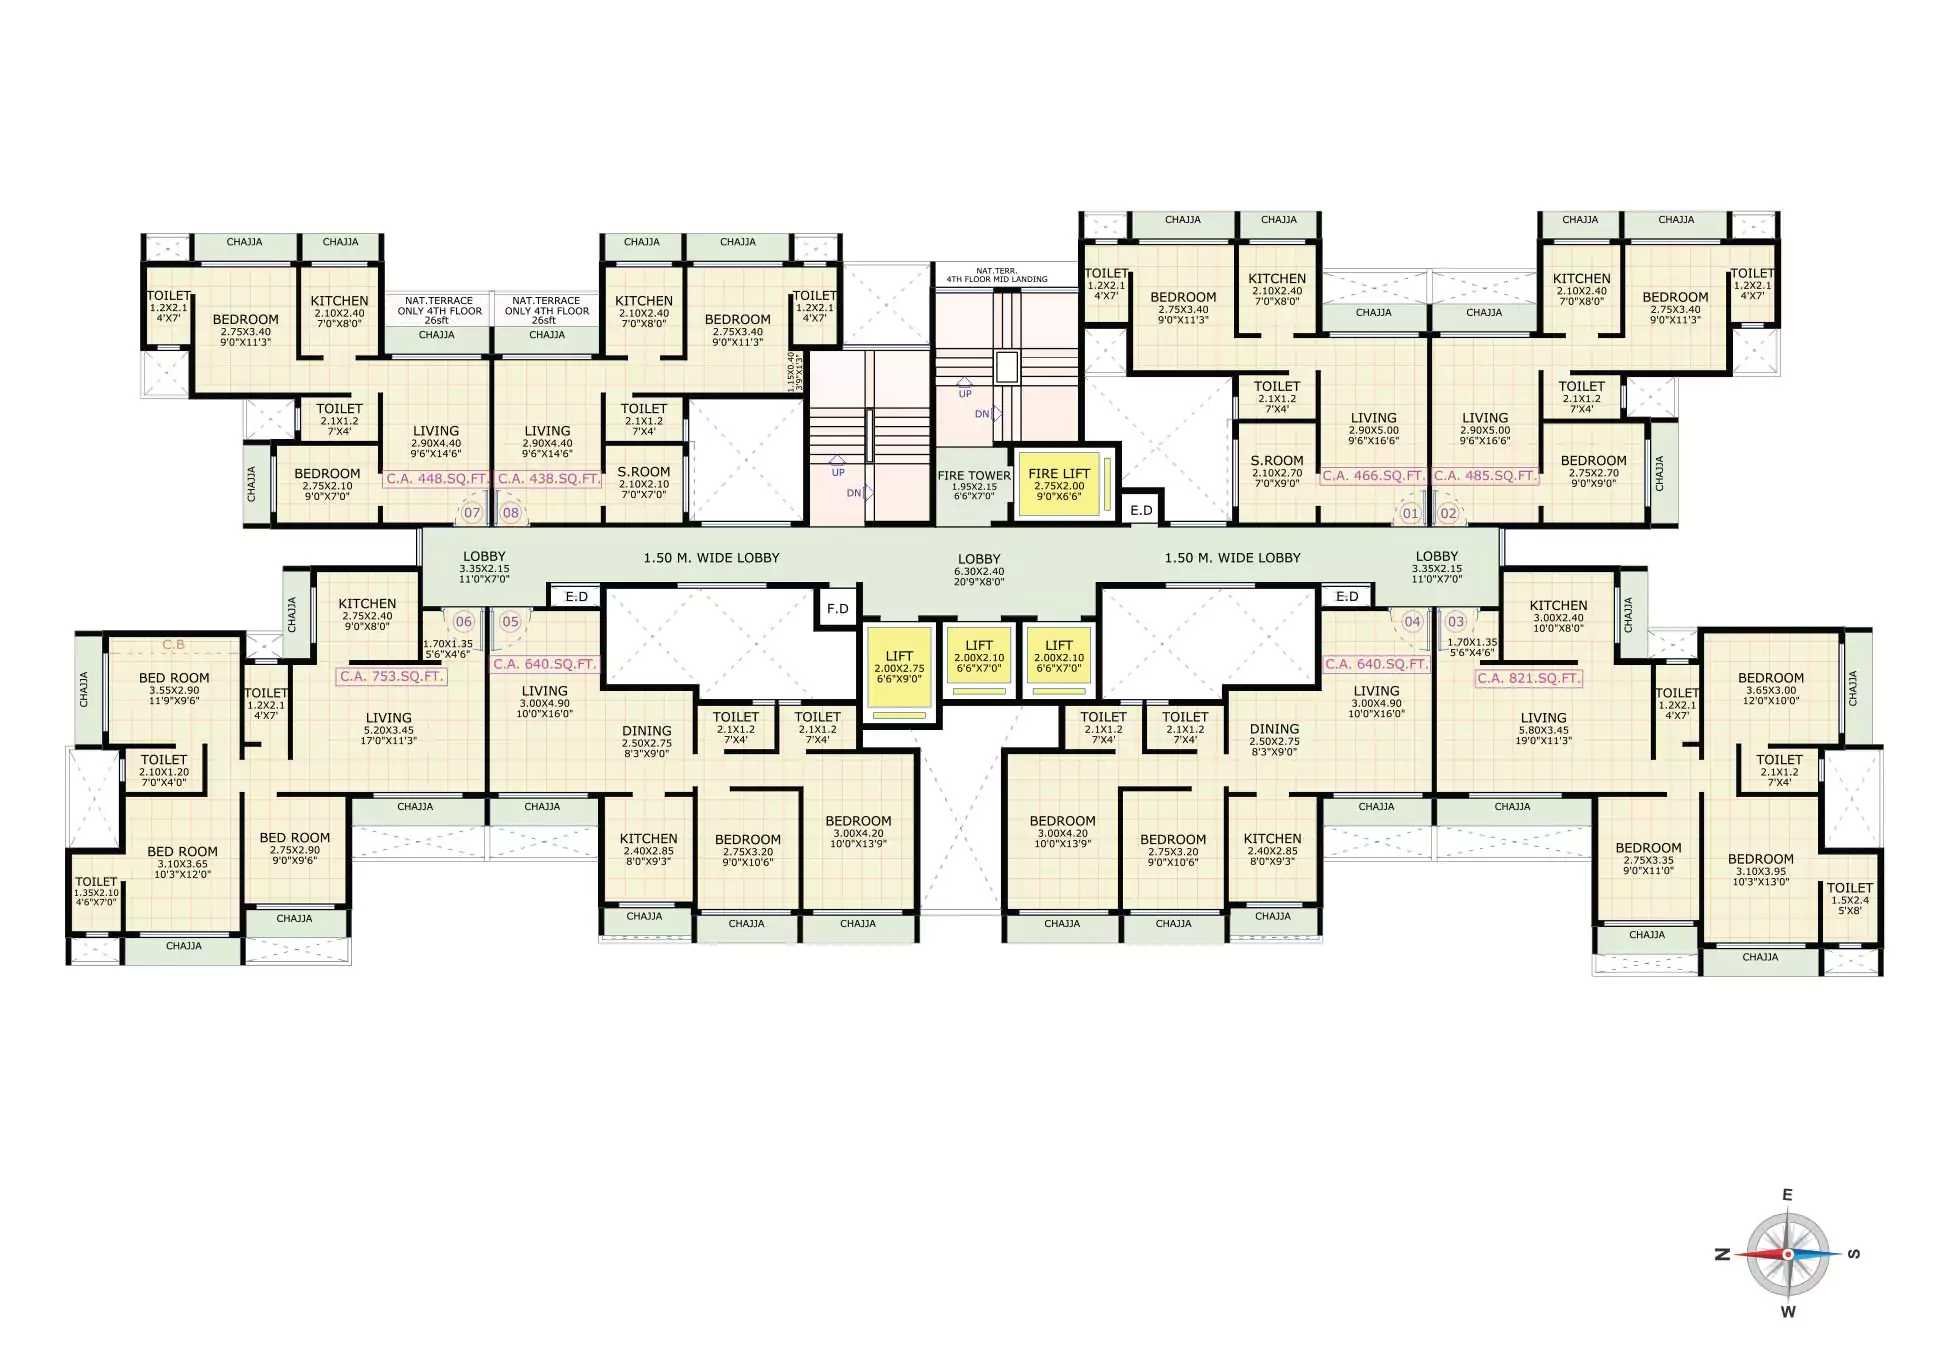 Typical Floor Plan - Gami Jade